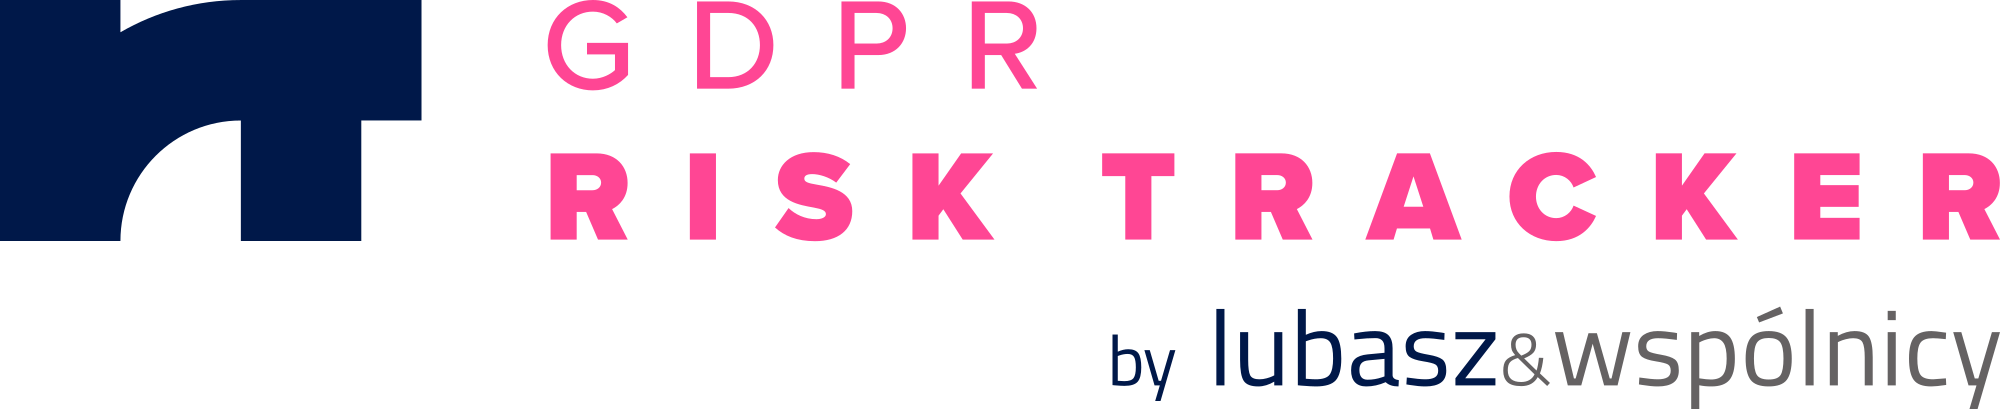 GDPR Risk Tracker 2.0 - logo poziome